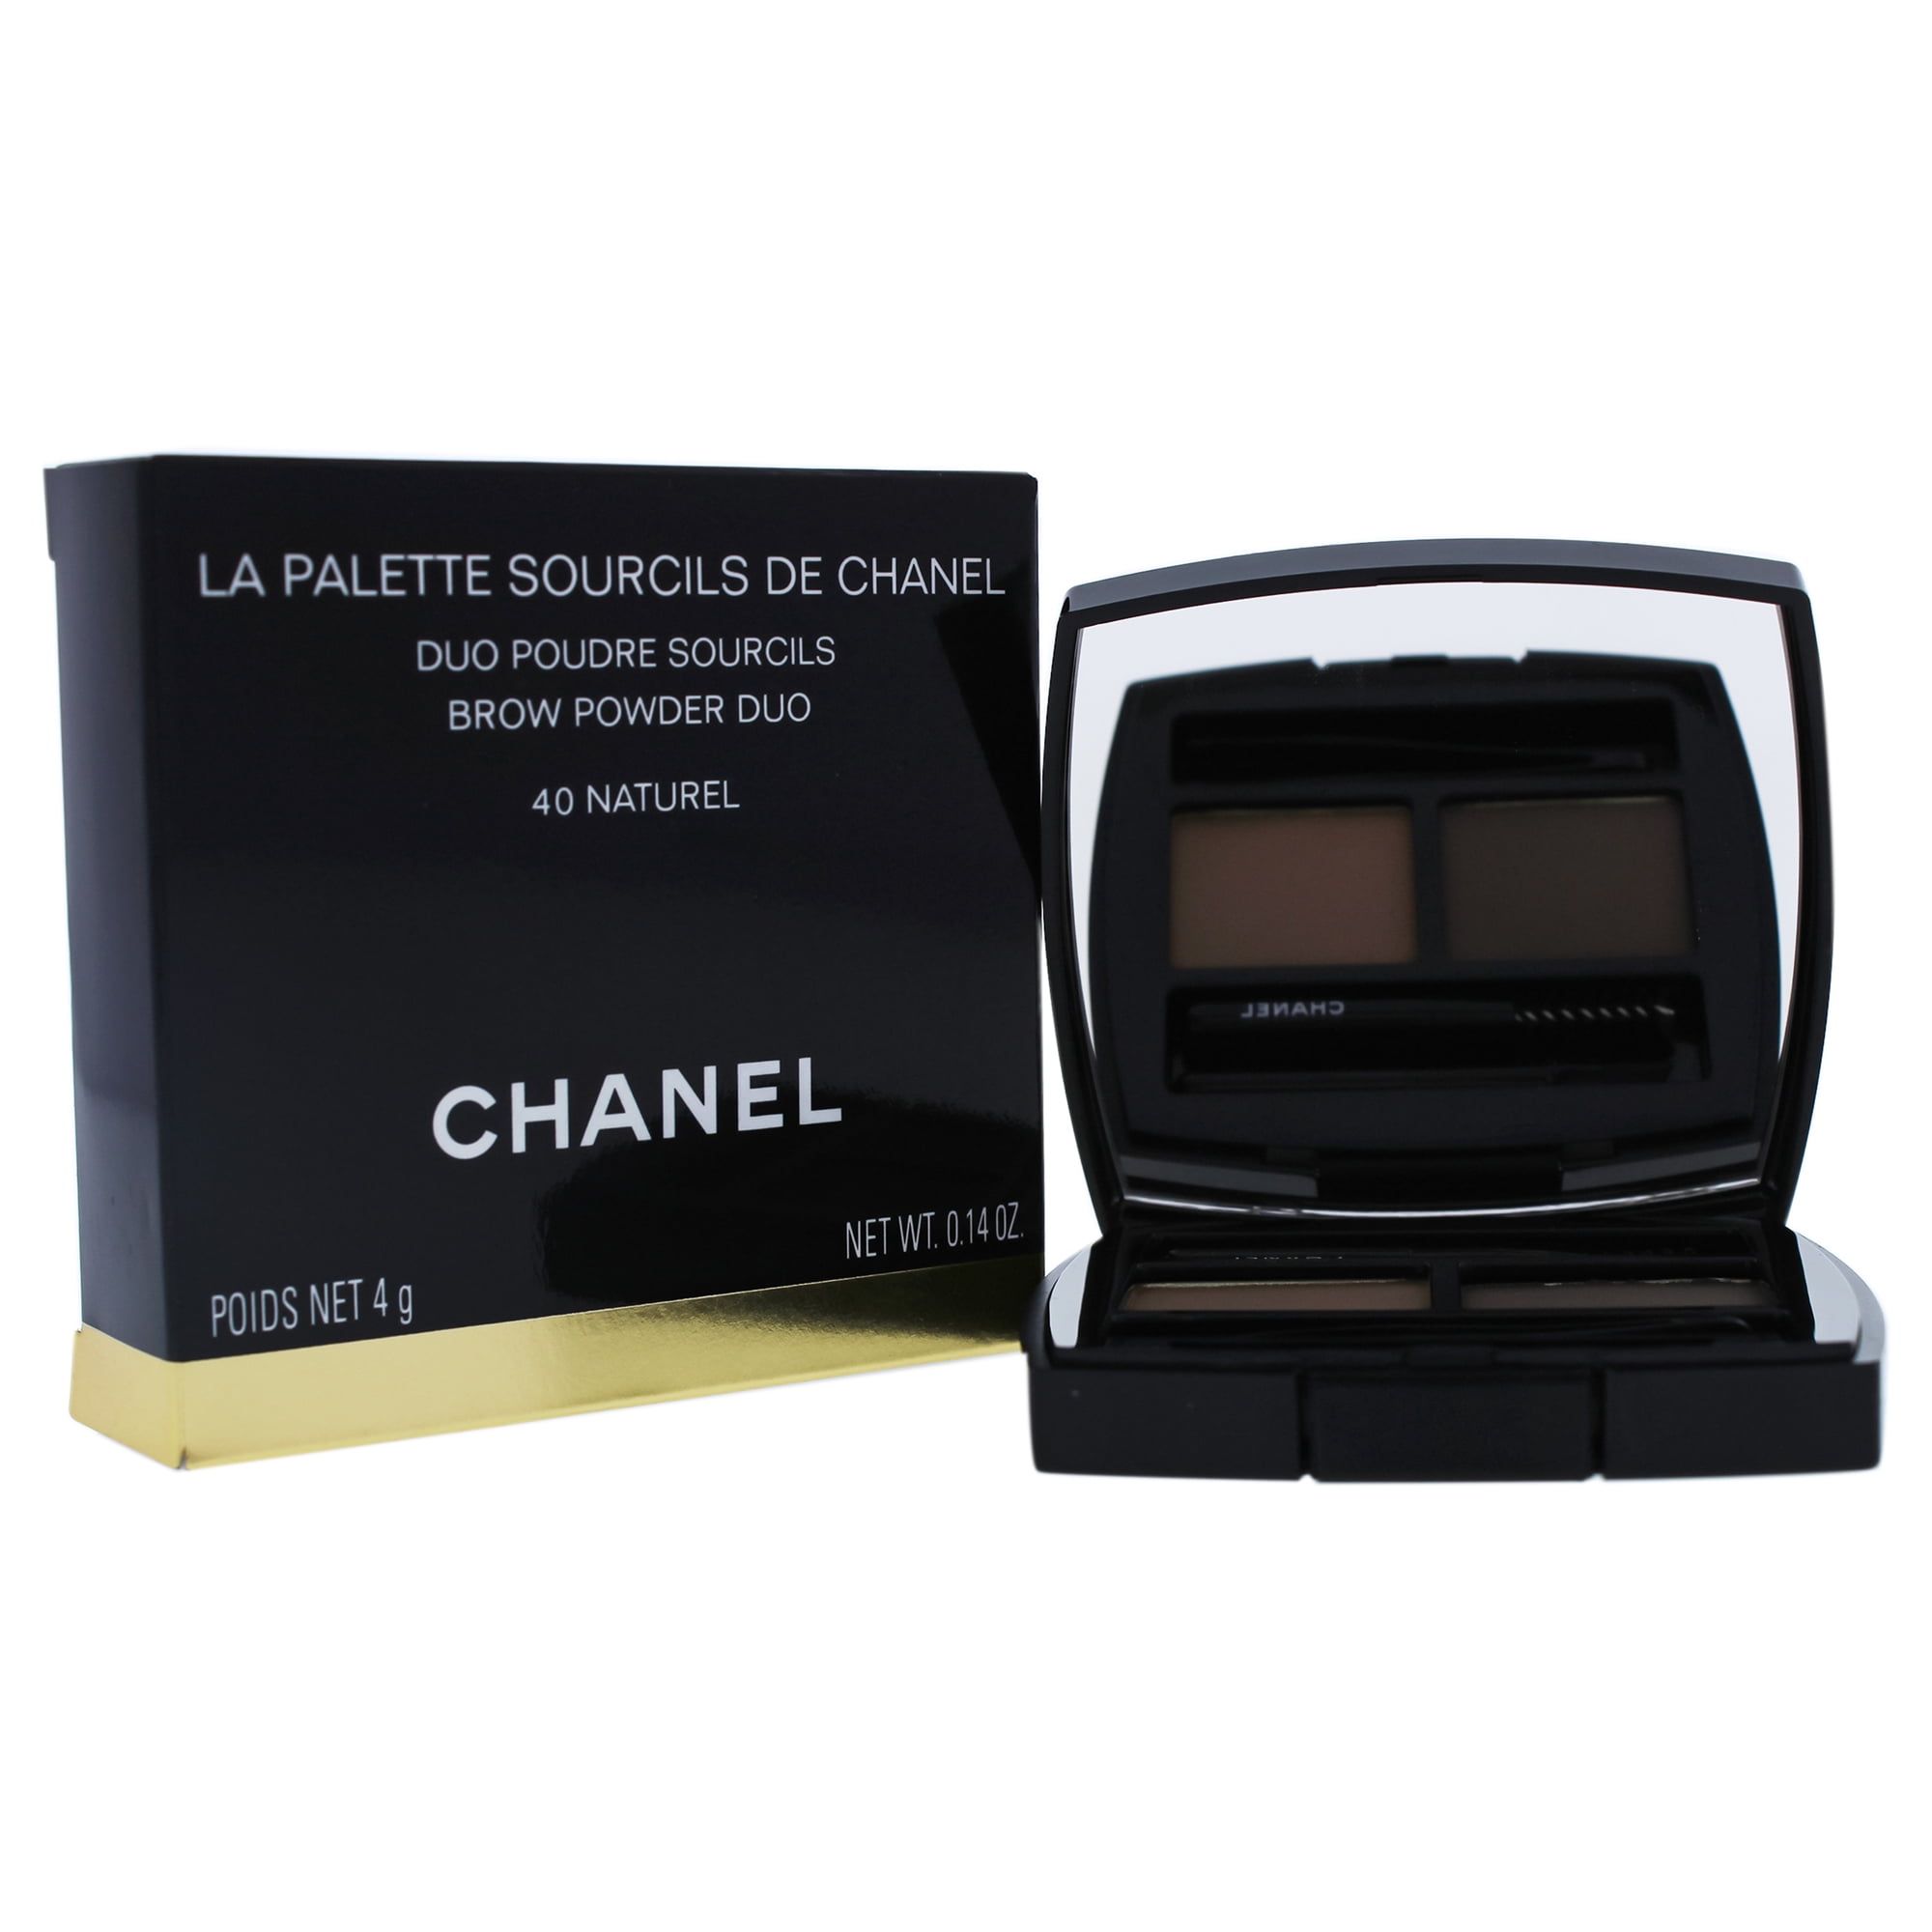 La Palette Sourcils De Chanel Brow Powder Duo - 40 Naturel by Chanel for  Women - 0.14 oz Powder